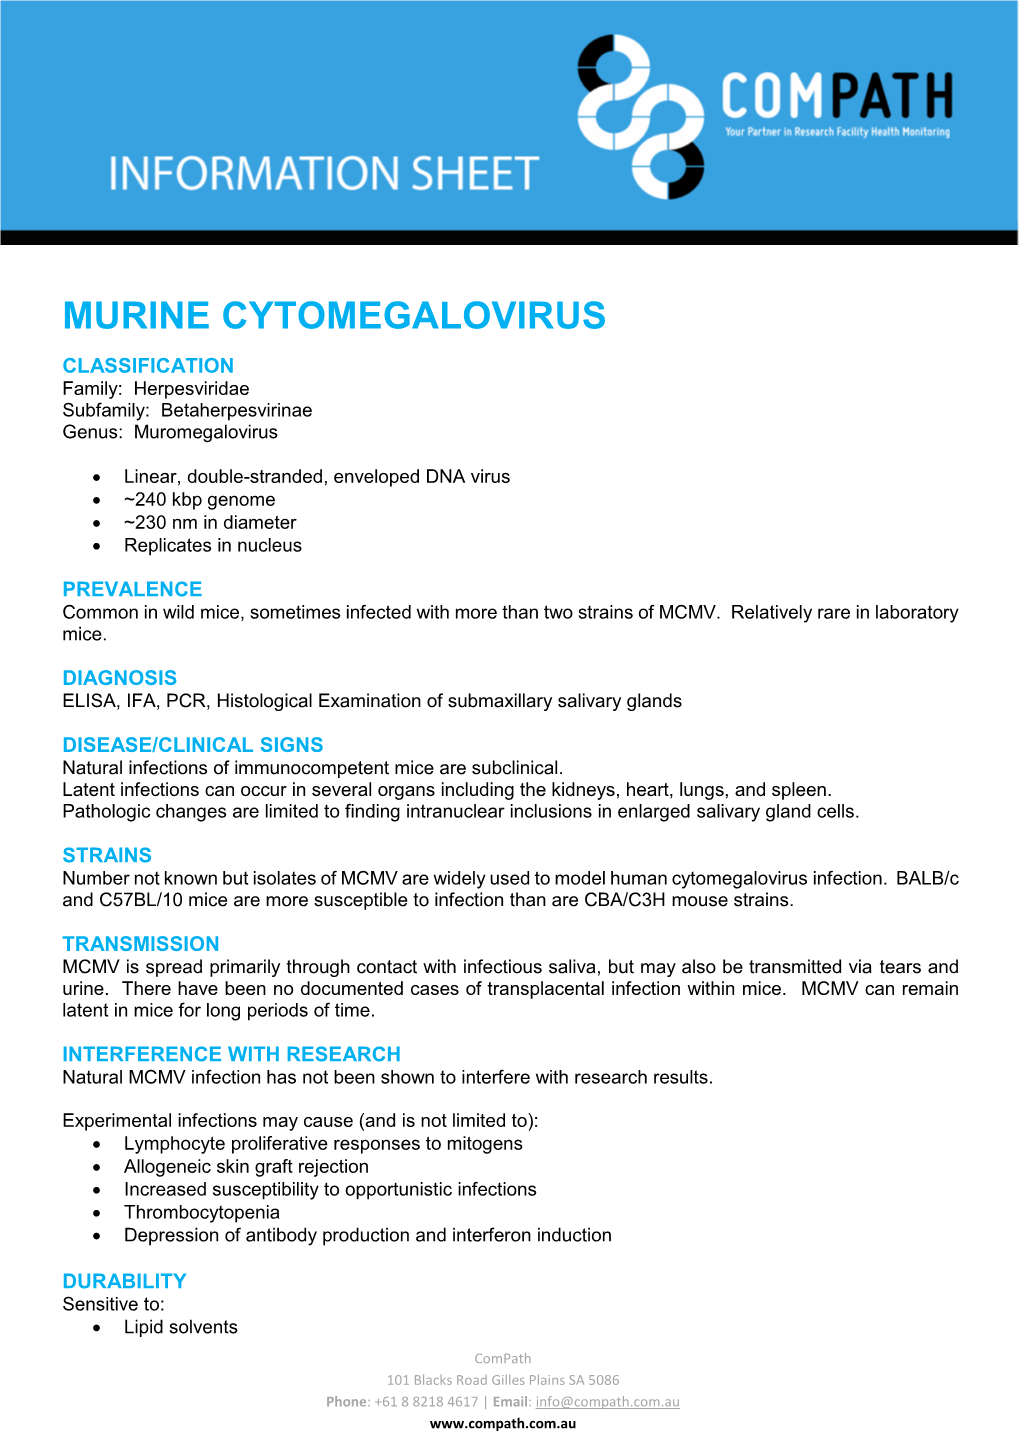 Murine Cytomegalovirus (MCMV)